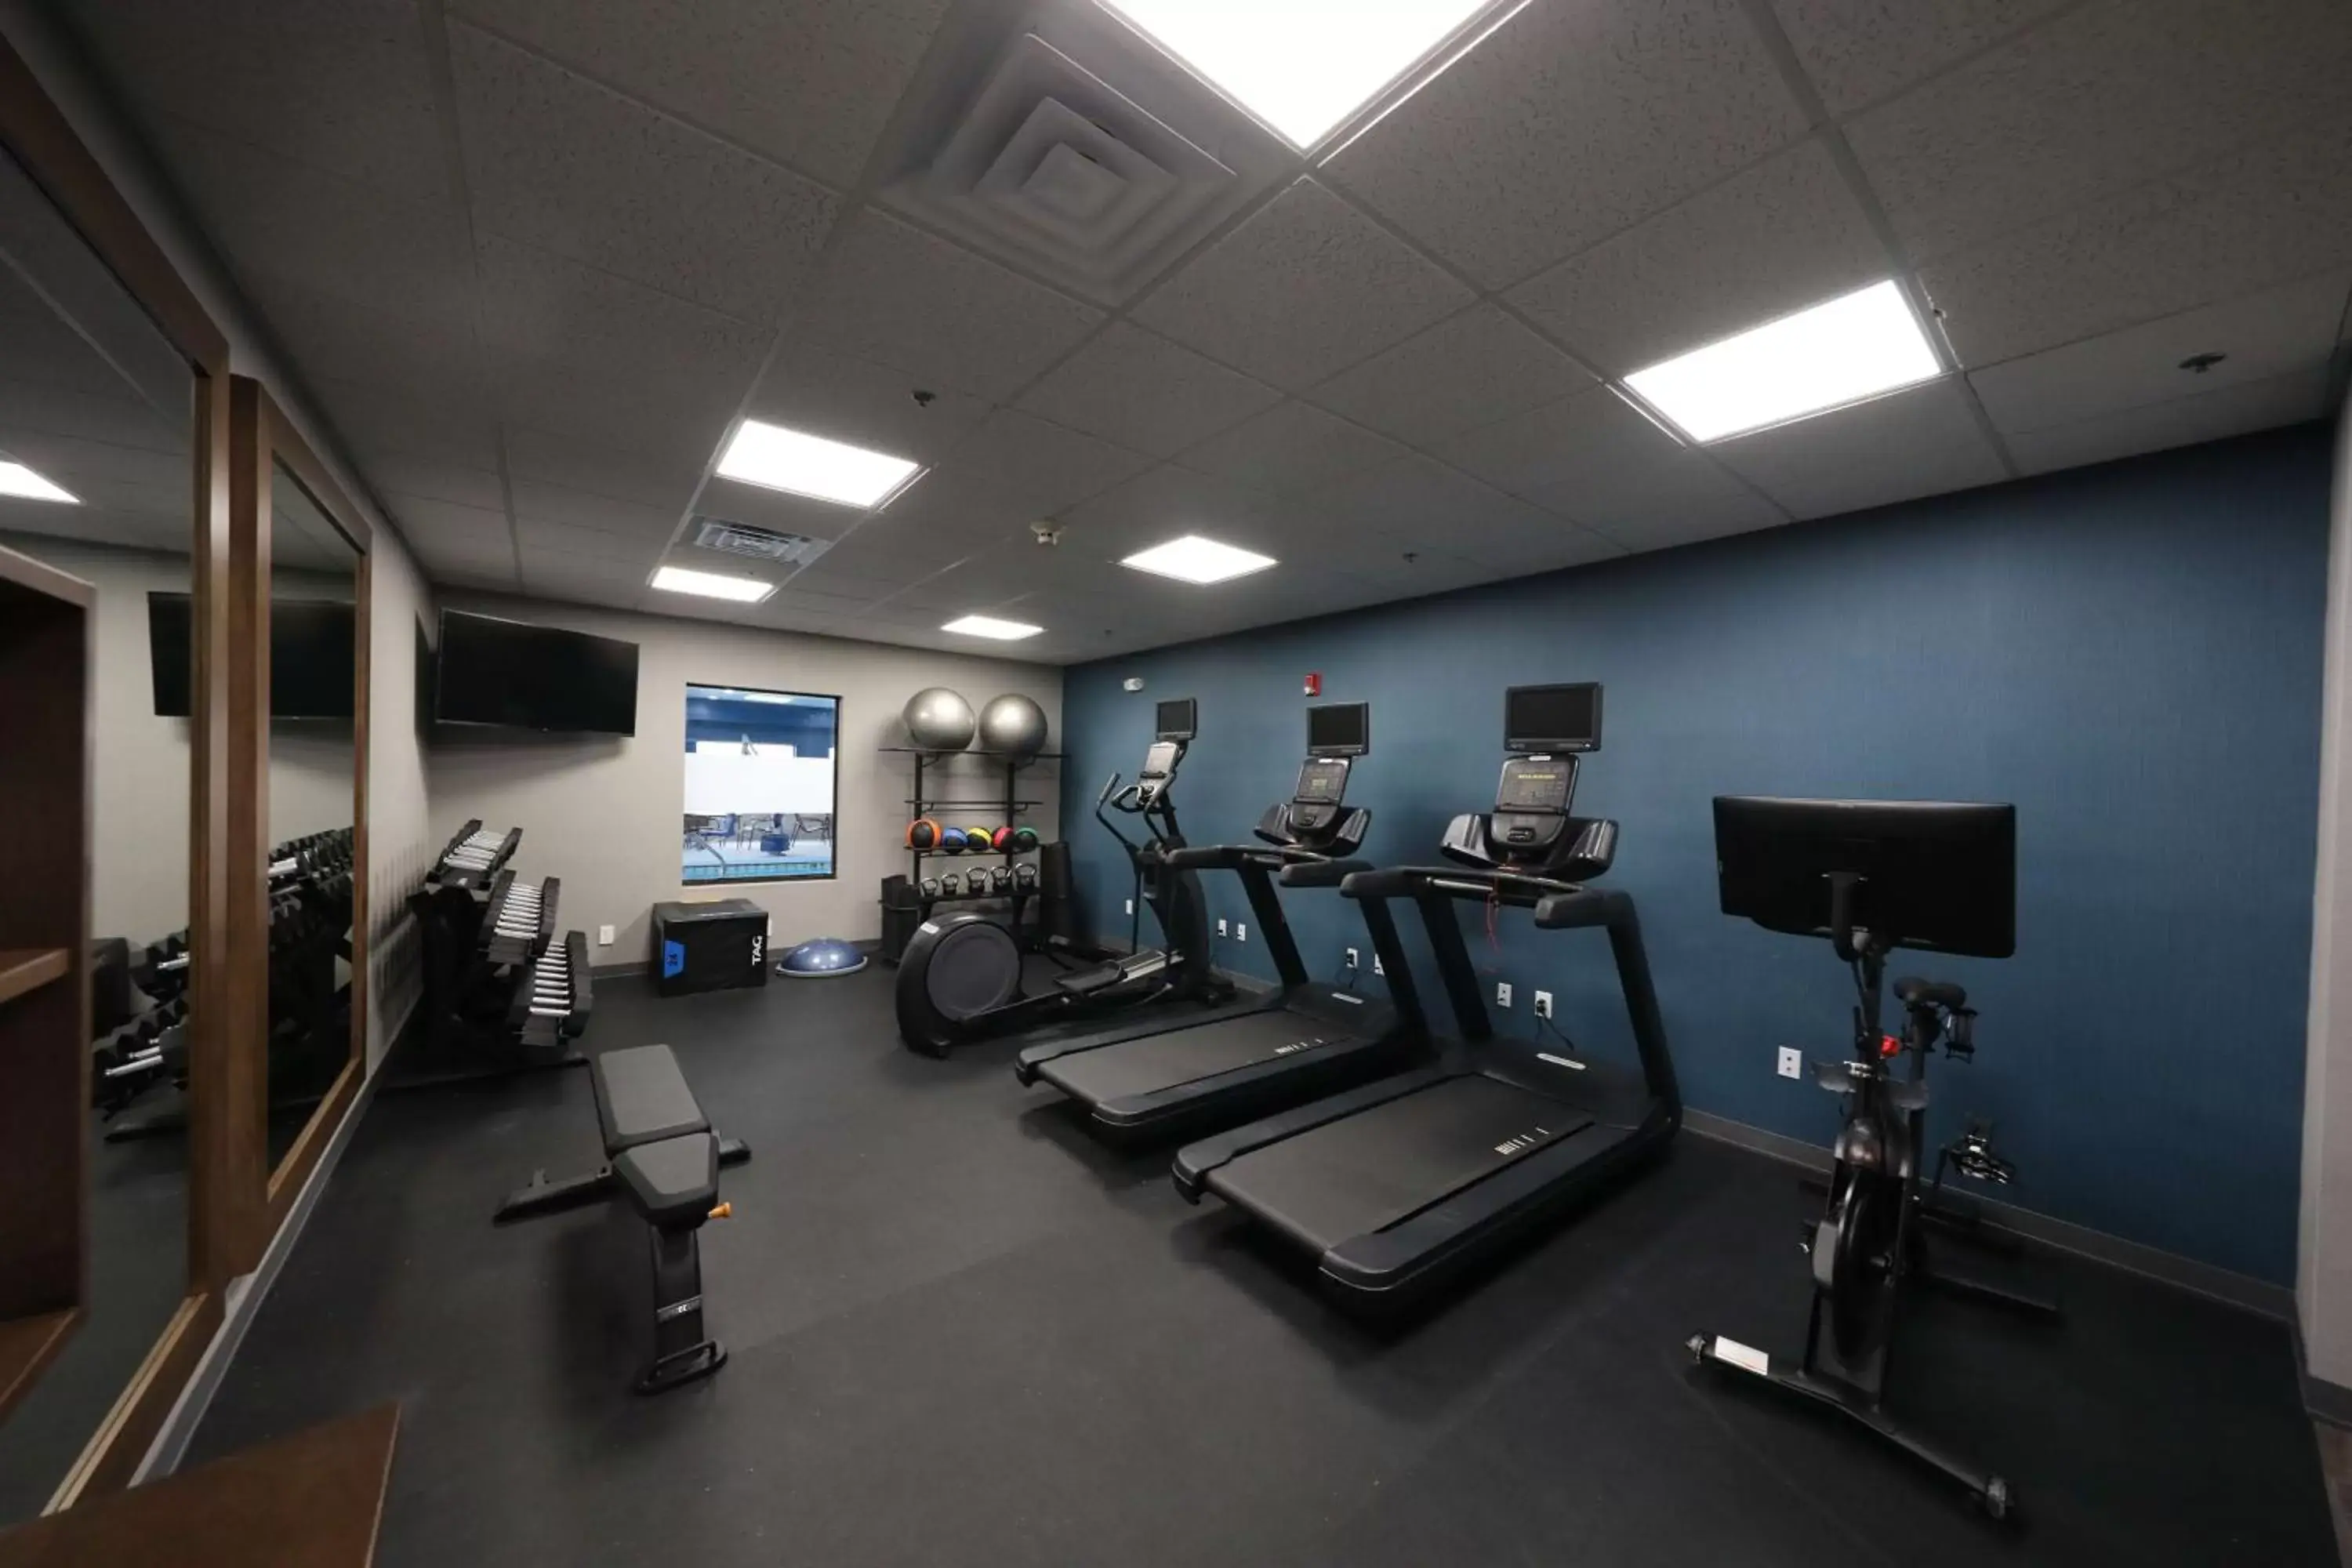 Fitness centre/facilities, Fitness Center/Facilities in Hampton Inn Hutchinson